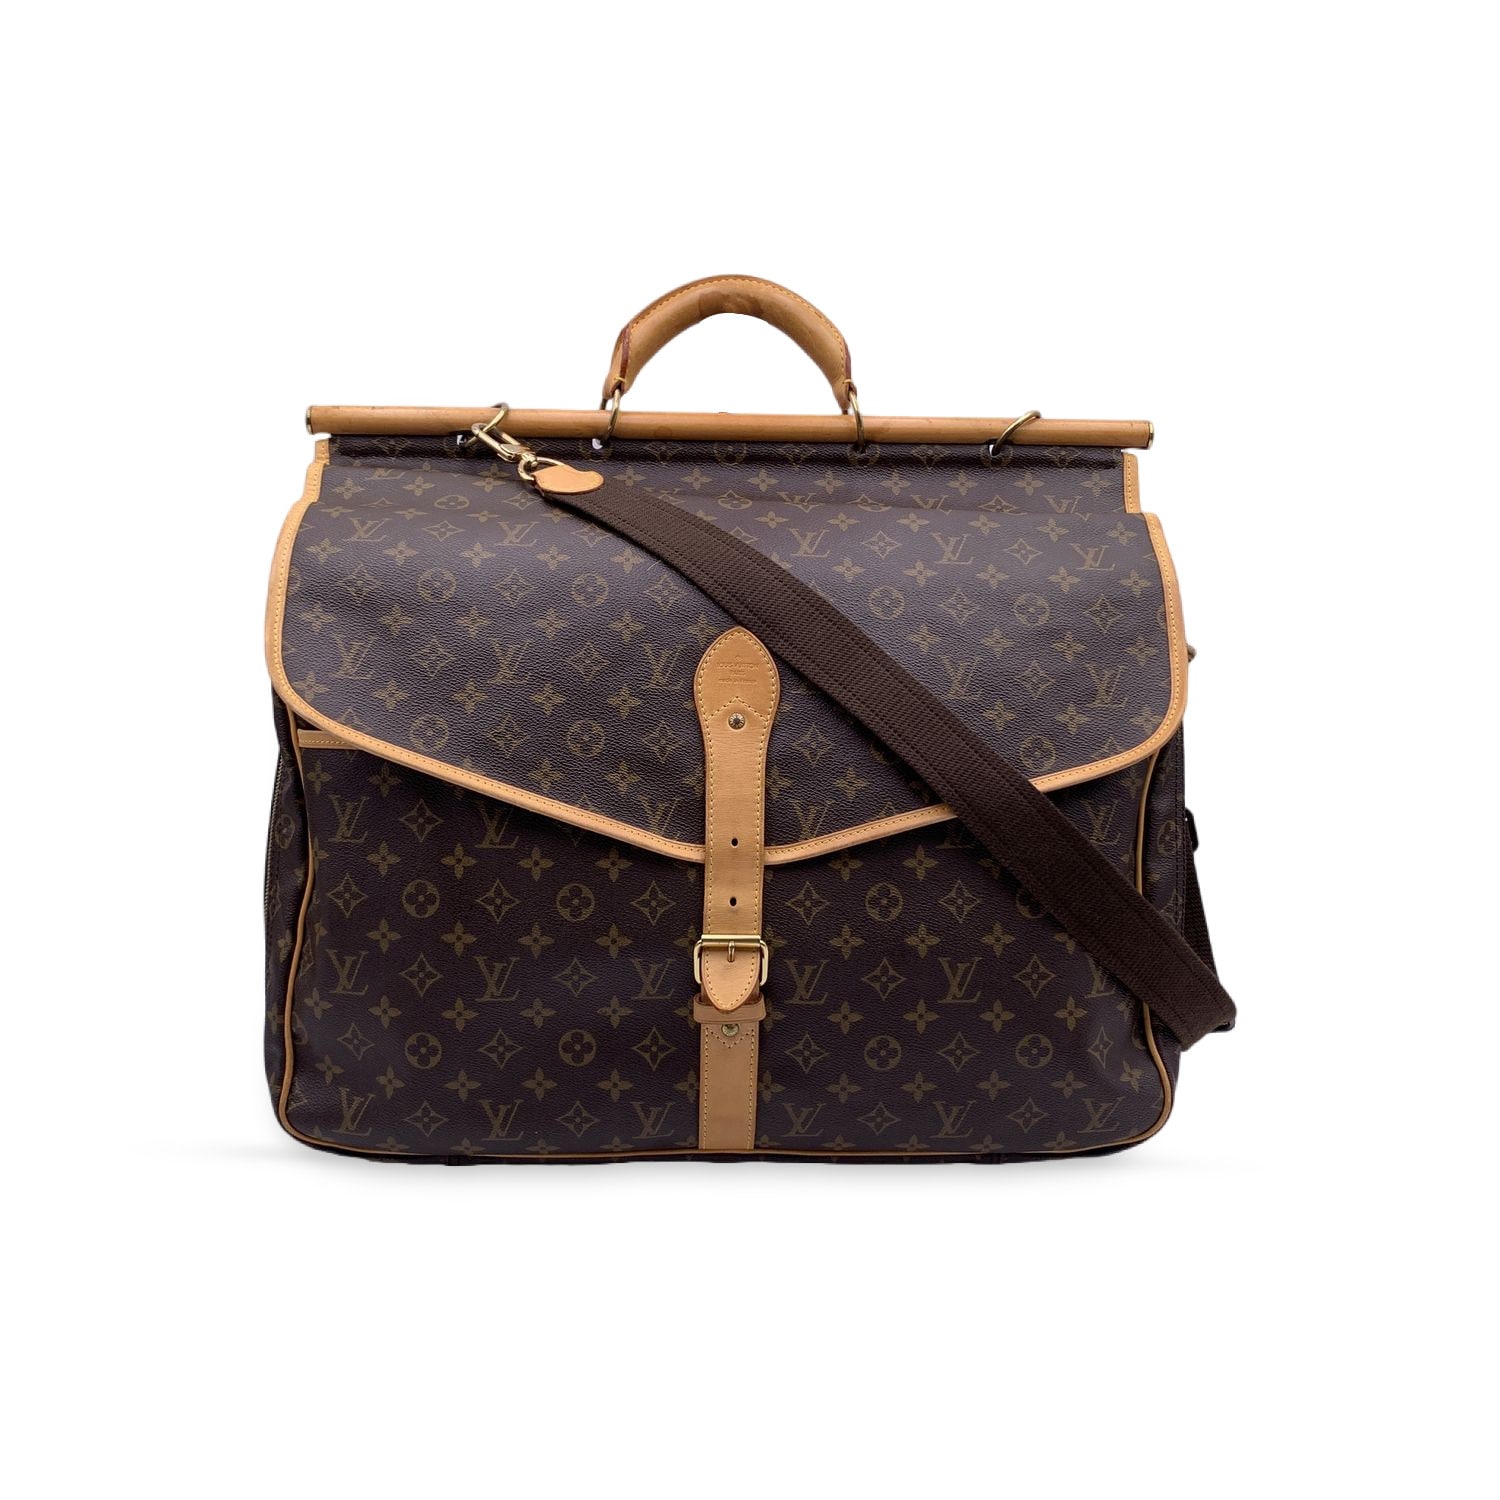 Vintage LOUIS VUITTON LV French Co Garment Suitcase Travel Bag Luggage w/  Pounce